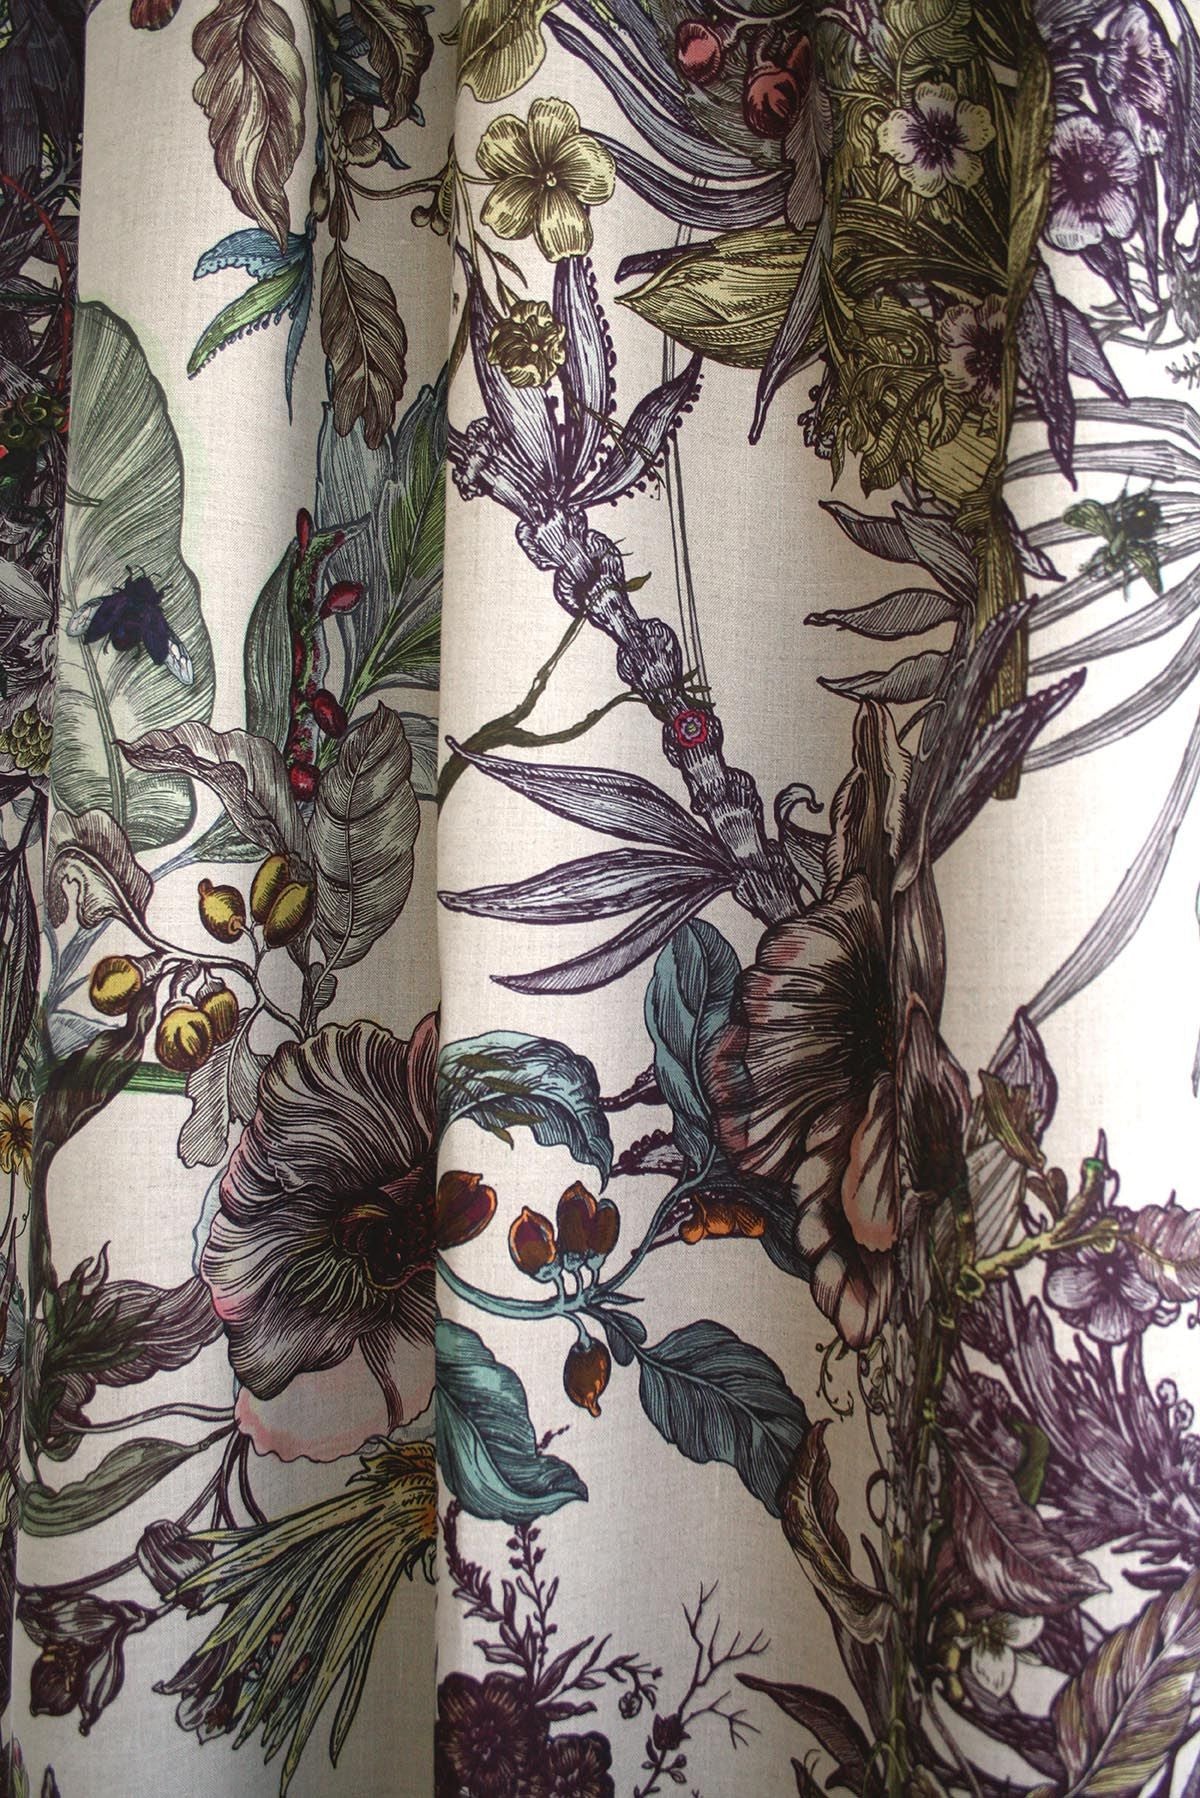 opera botanica fabric by timorous beasties on adorn.house